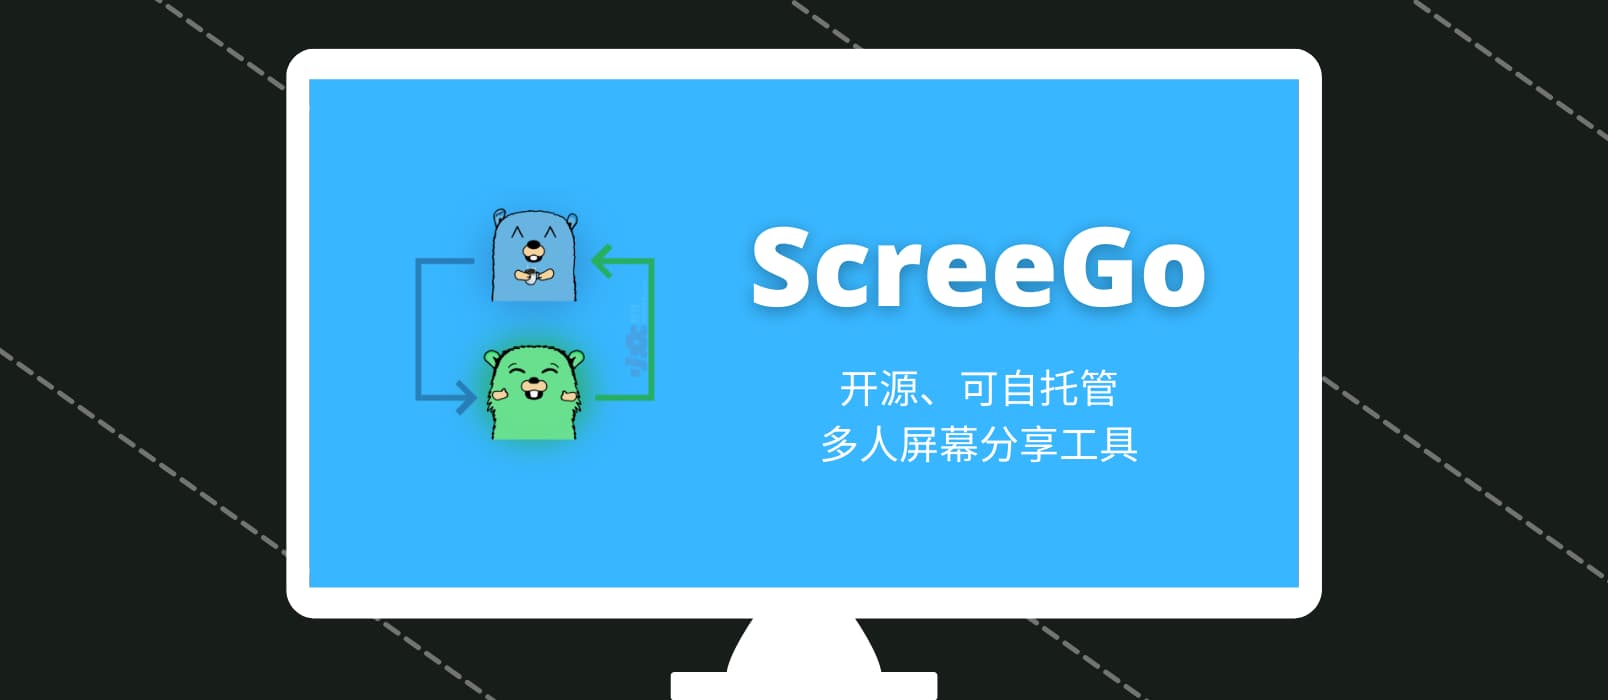 ScreeGo - 开源、可自托管，多人屏幕分享工具